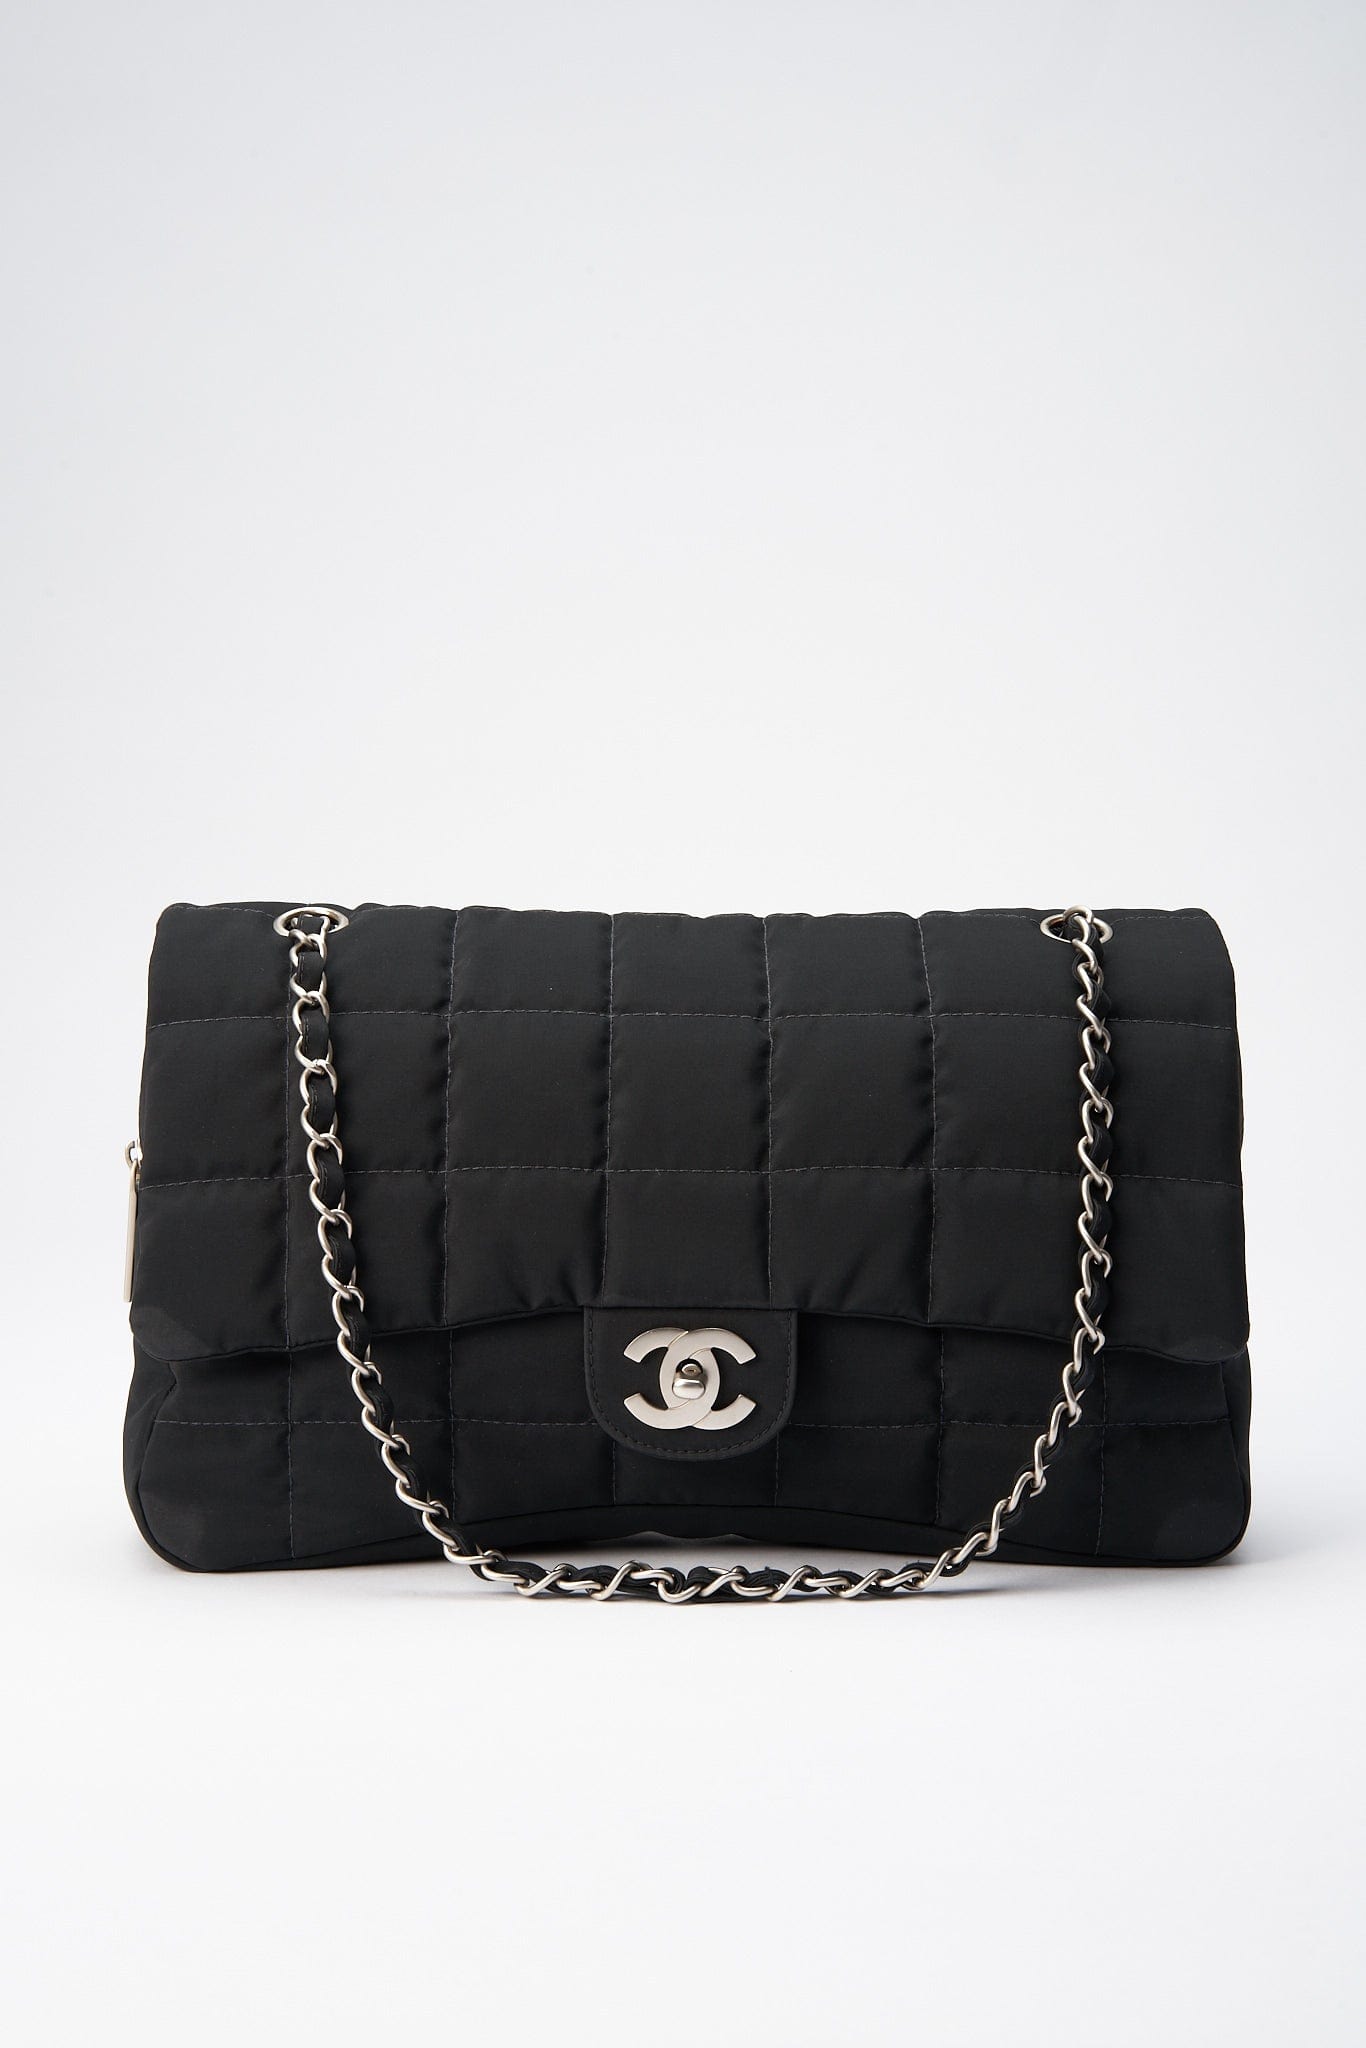 Chanel Black Nylon Large Chocolate Bar Flap Bag – The Hosta